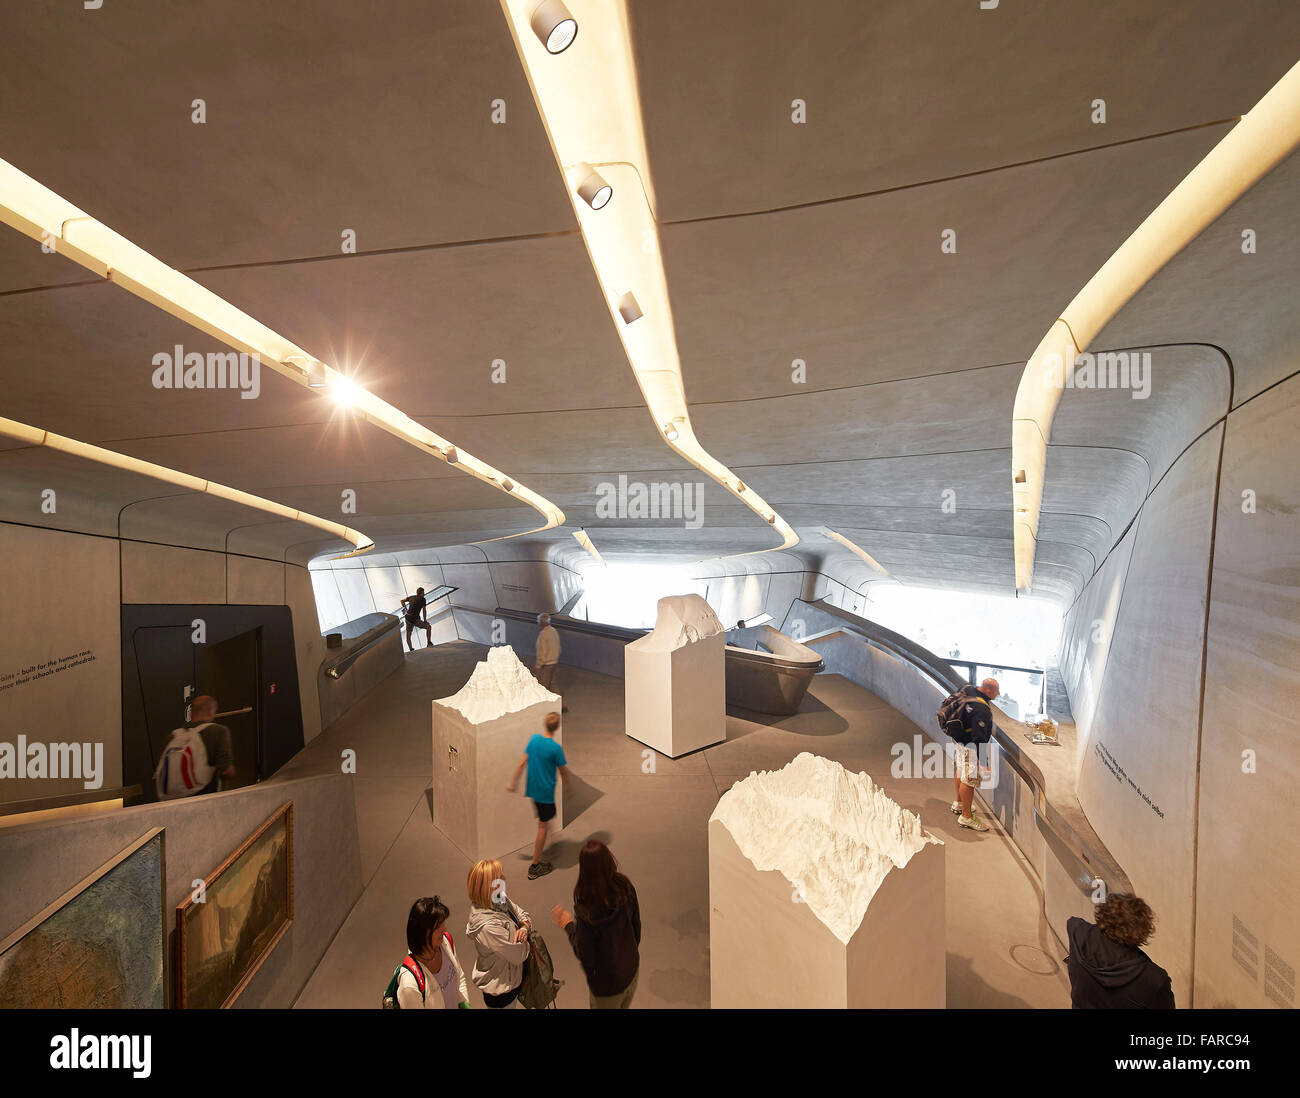 Exhibition space with artefacts. Messner Mountain Museum Corones, Mount Kronplatz, Italy. Architect: Zaha Hadid Architects, 2015 Stock Photo